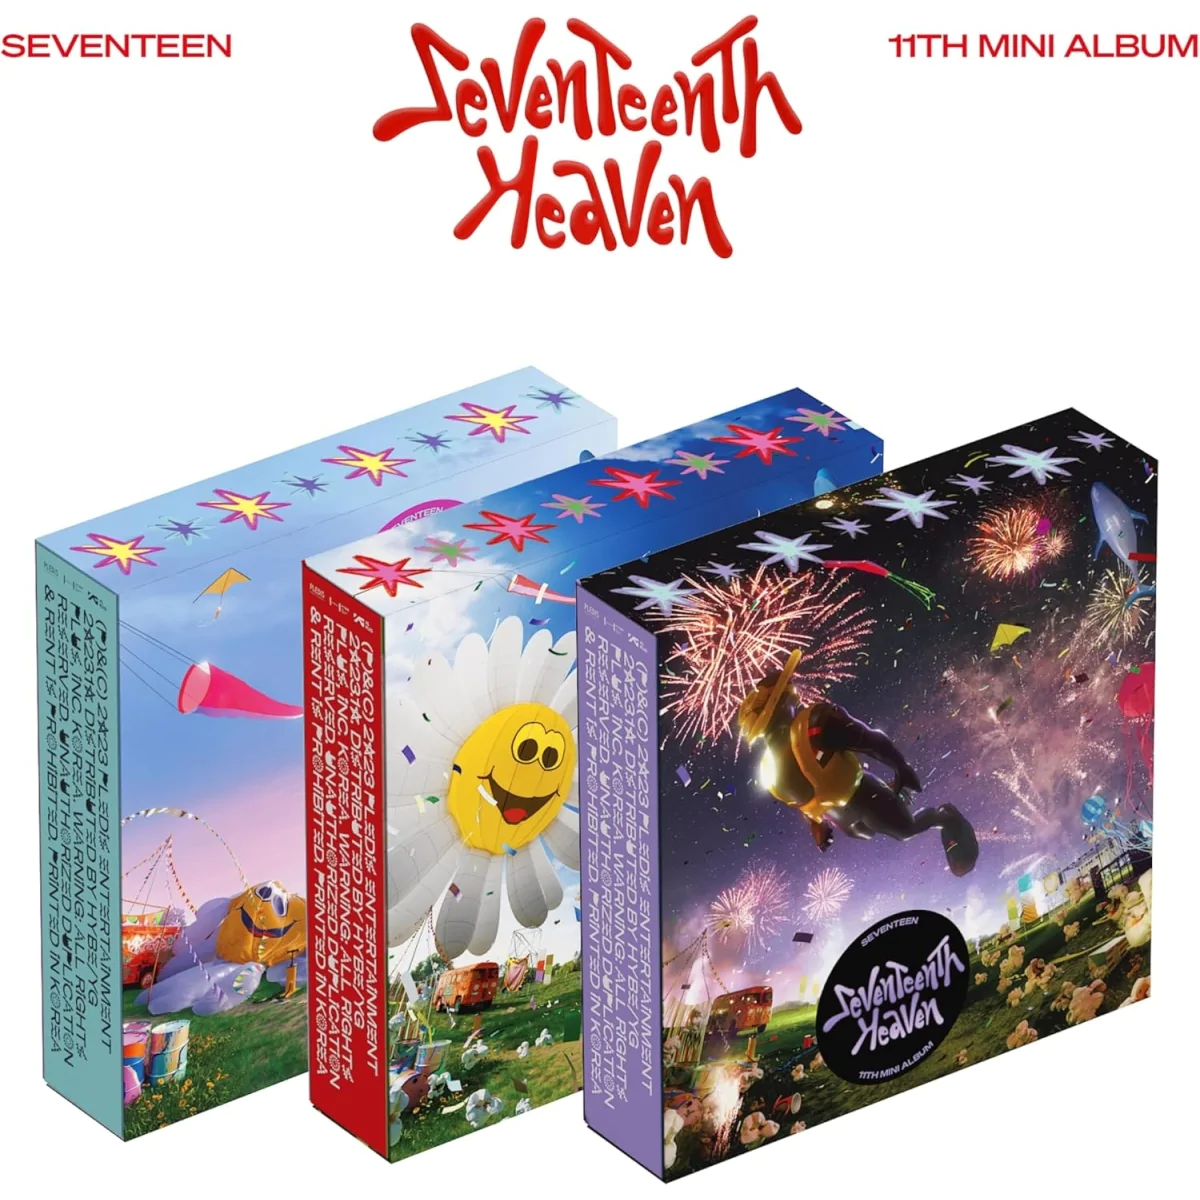 SEVENTEEN - SEVENTEENTH HEAVEN (PM 2:14 Version) (11th Mini Album) 